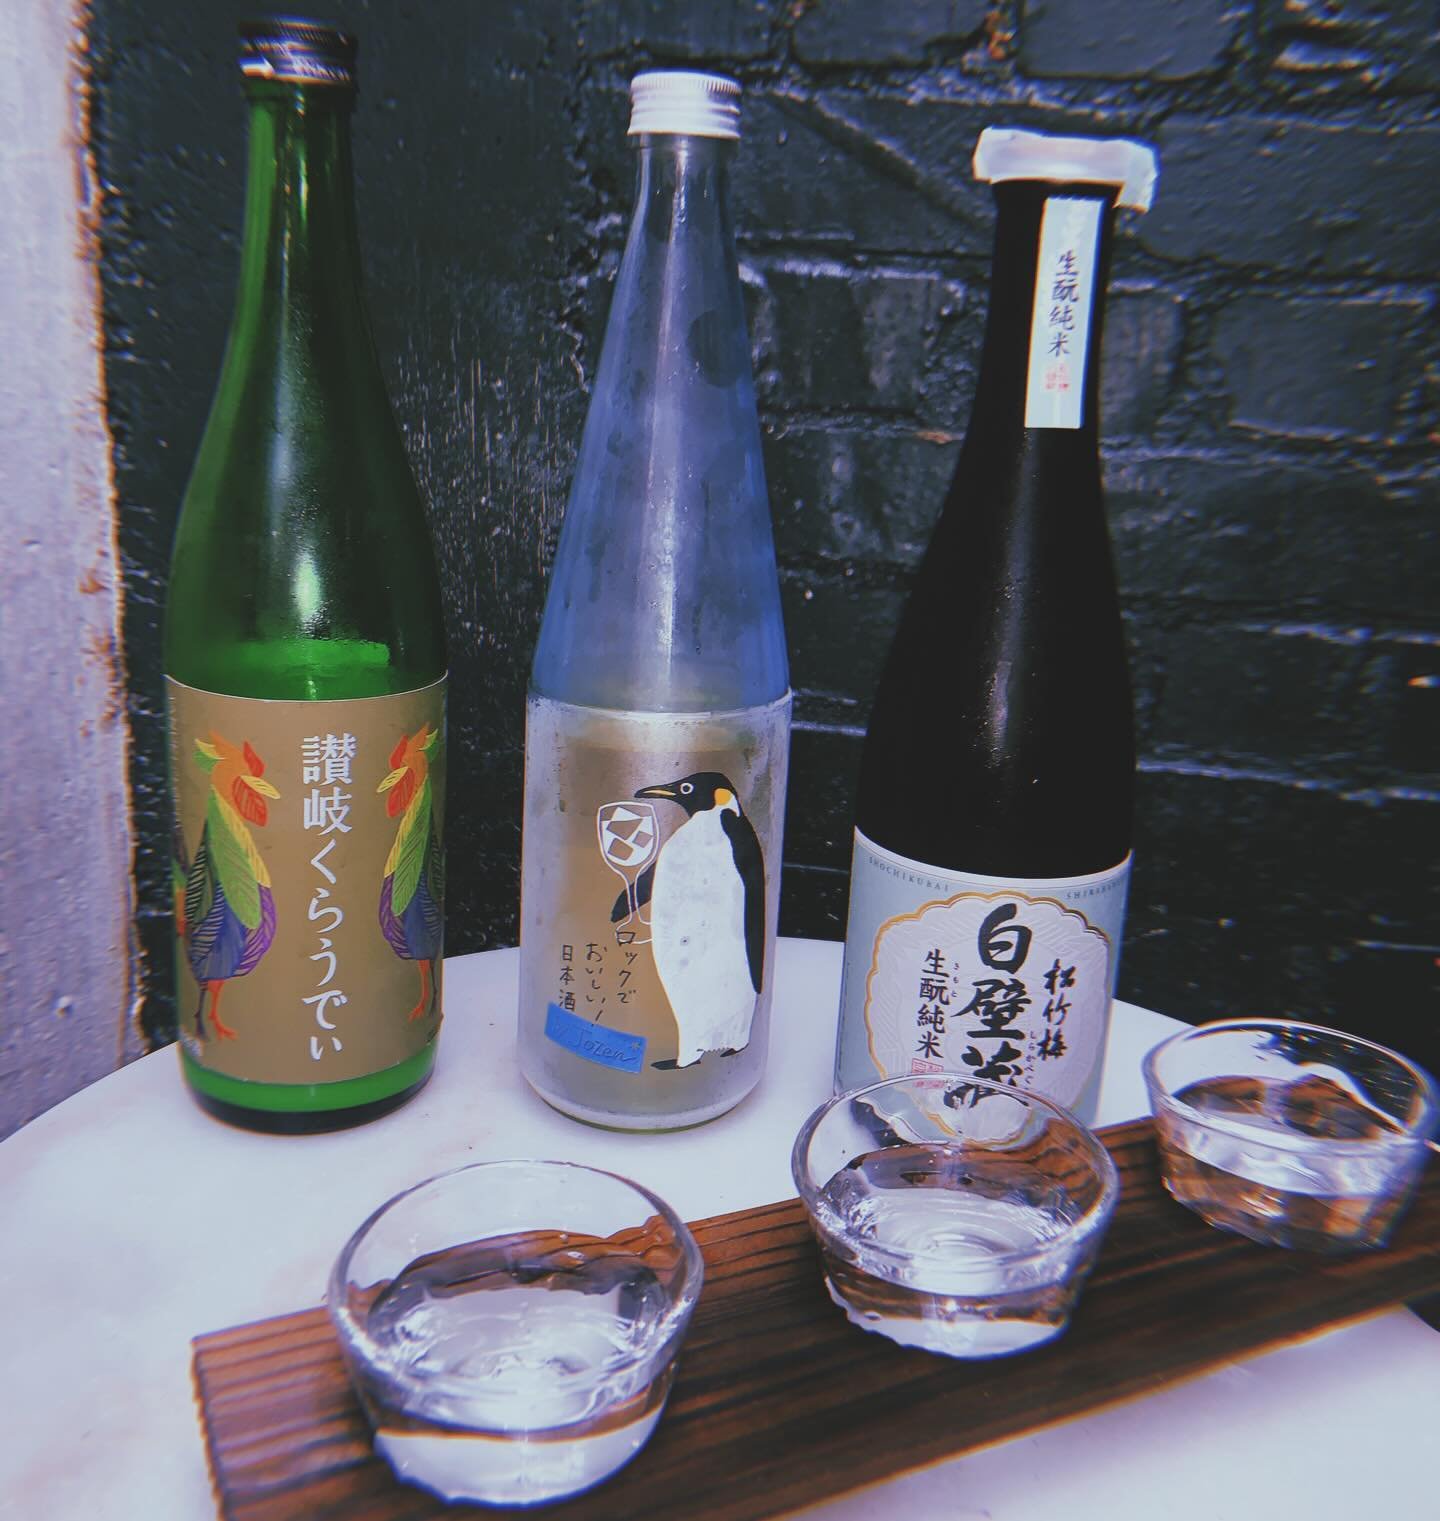 We&rsquo;ve added some more sake to the list! 

Kawatsuru Shuzo Sanuki Cloudy - creamy &amp; aromatic a bit like Yakult 

Rock Sake by Jozen - fruity &amp; sweet 

Takara Shuzo Shirakabegura - dried fruit &amp; umami with a clean crisp finish

All se